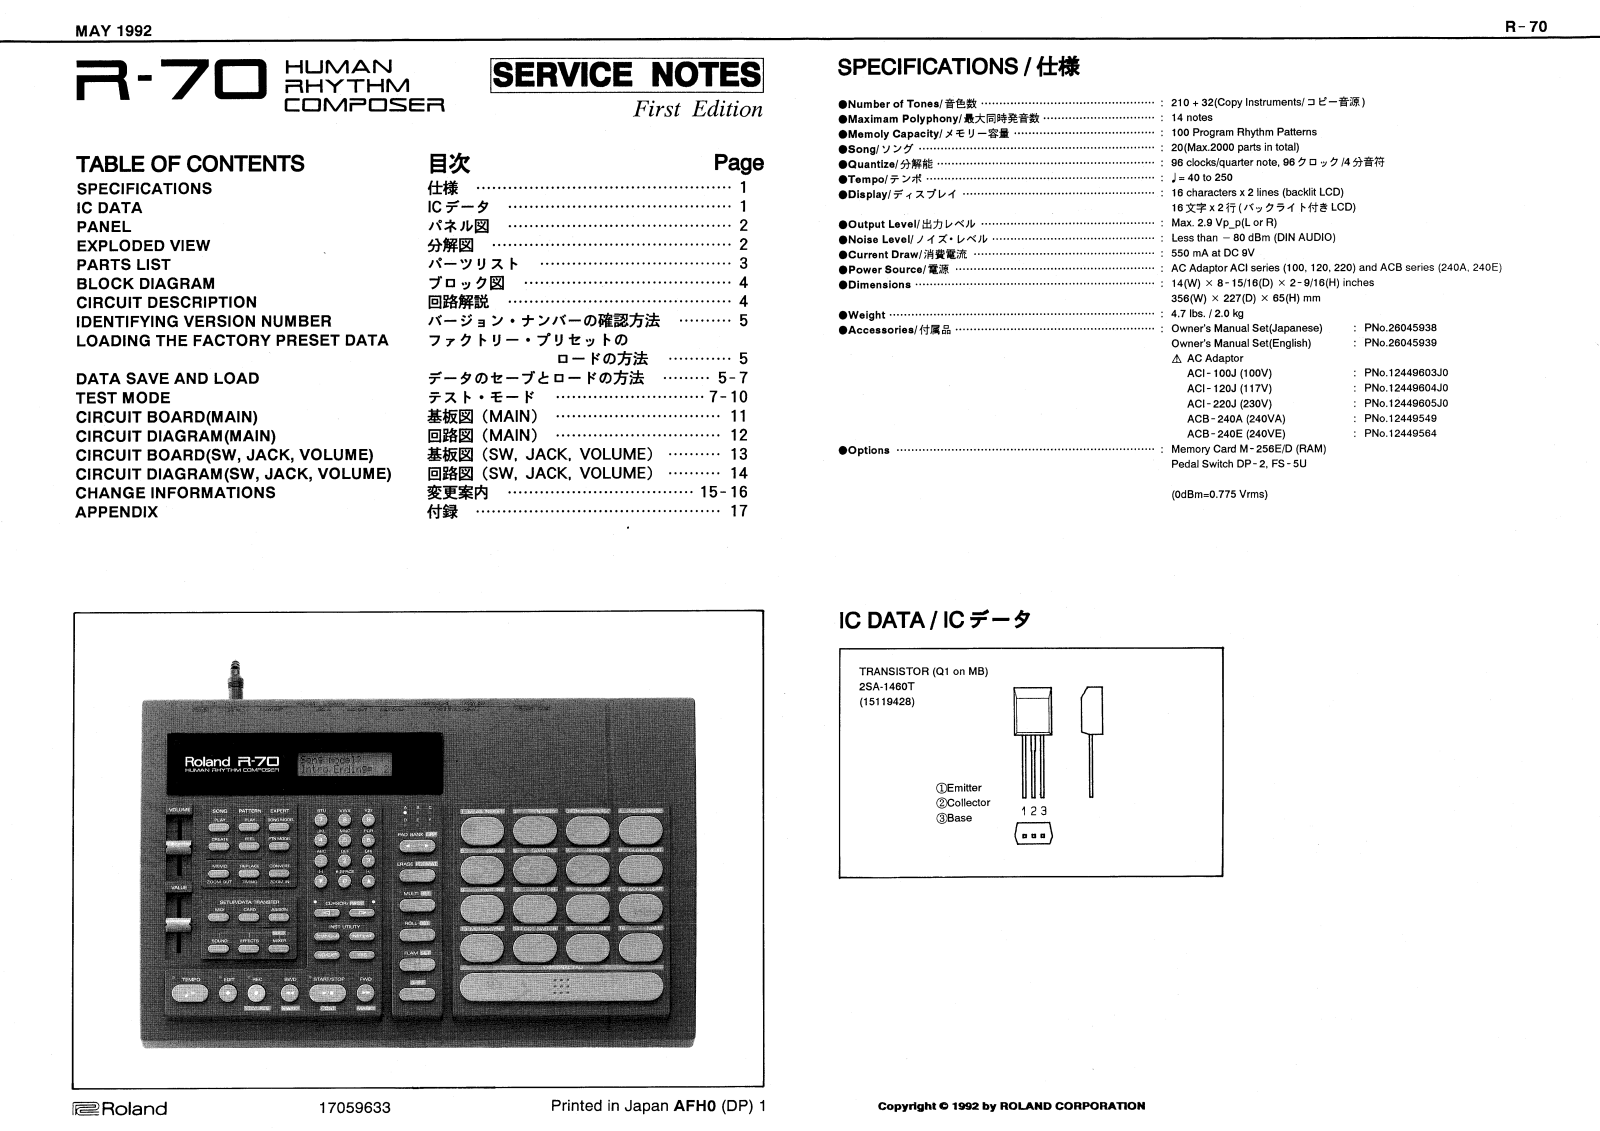 Roland R-70 Service Manual